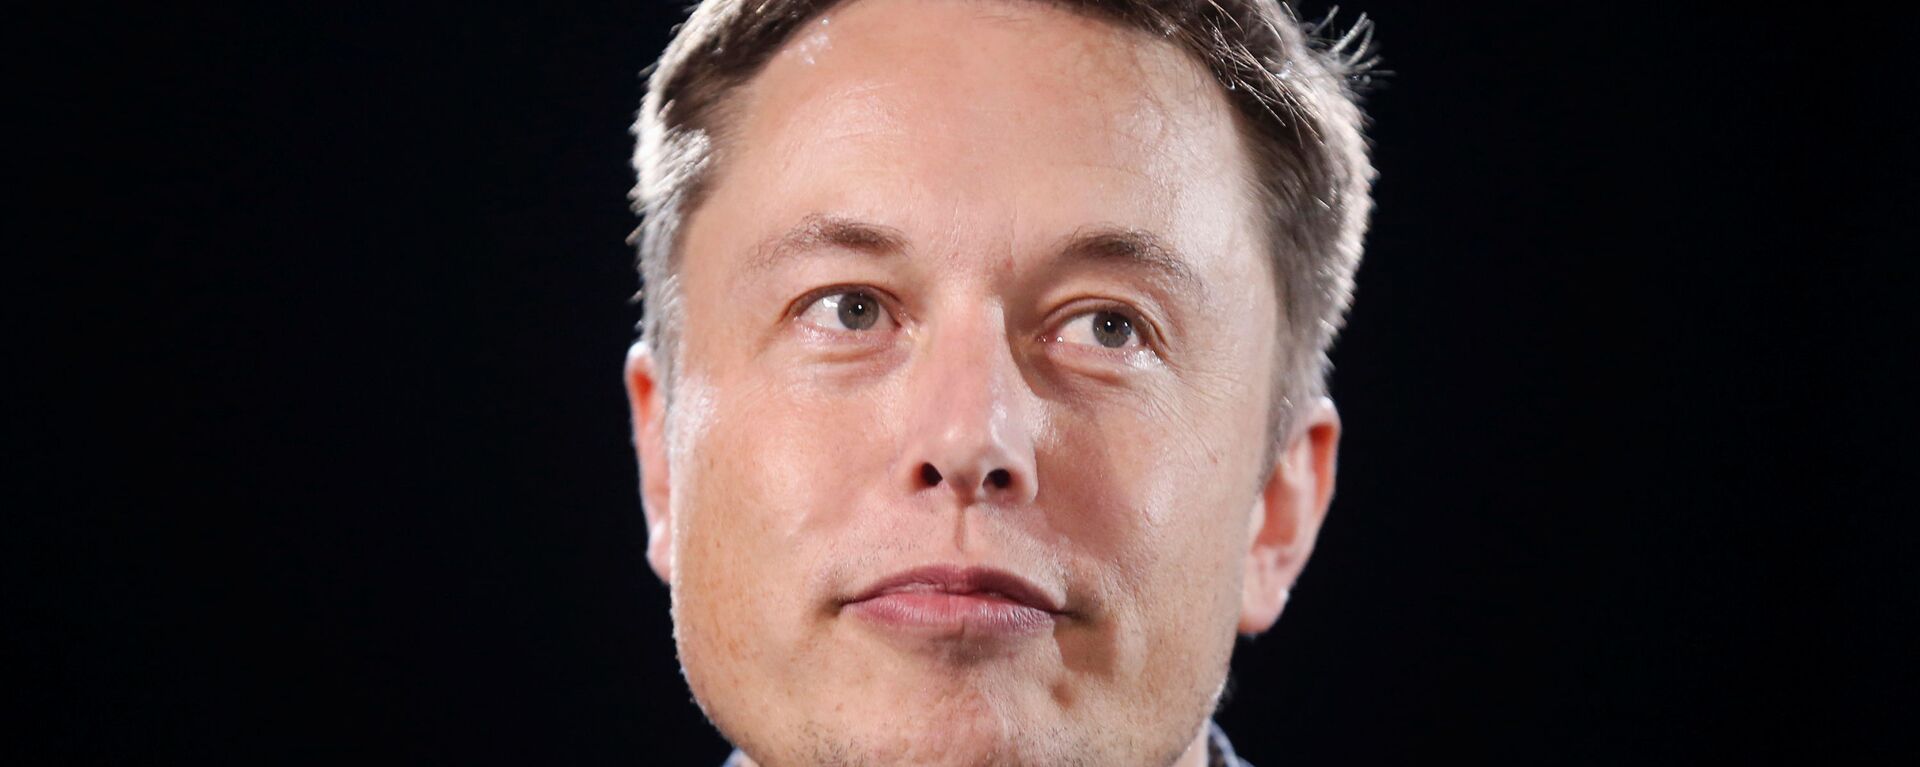 Elon Musk, director general de Tesla y SpaceX - Sputnik Mundo, 1920, 15.06.2021